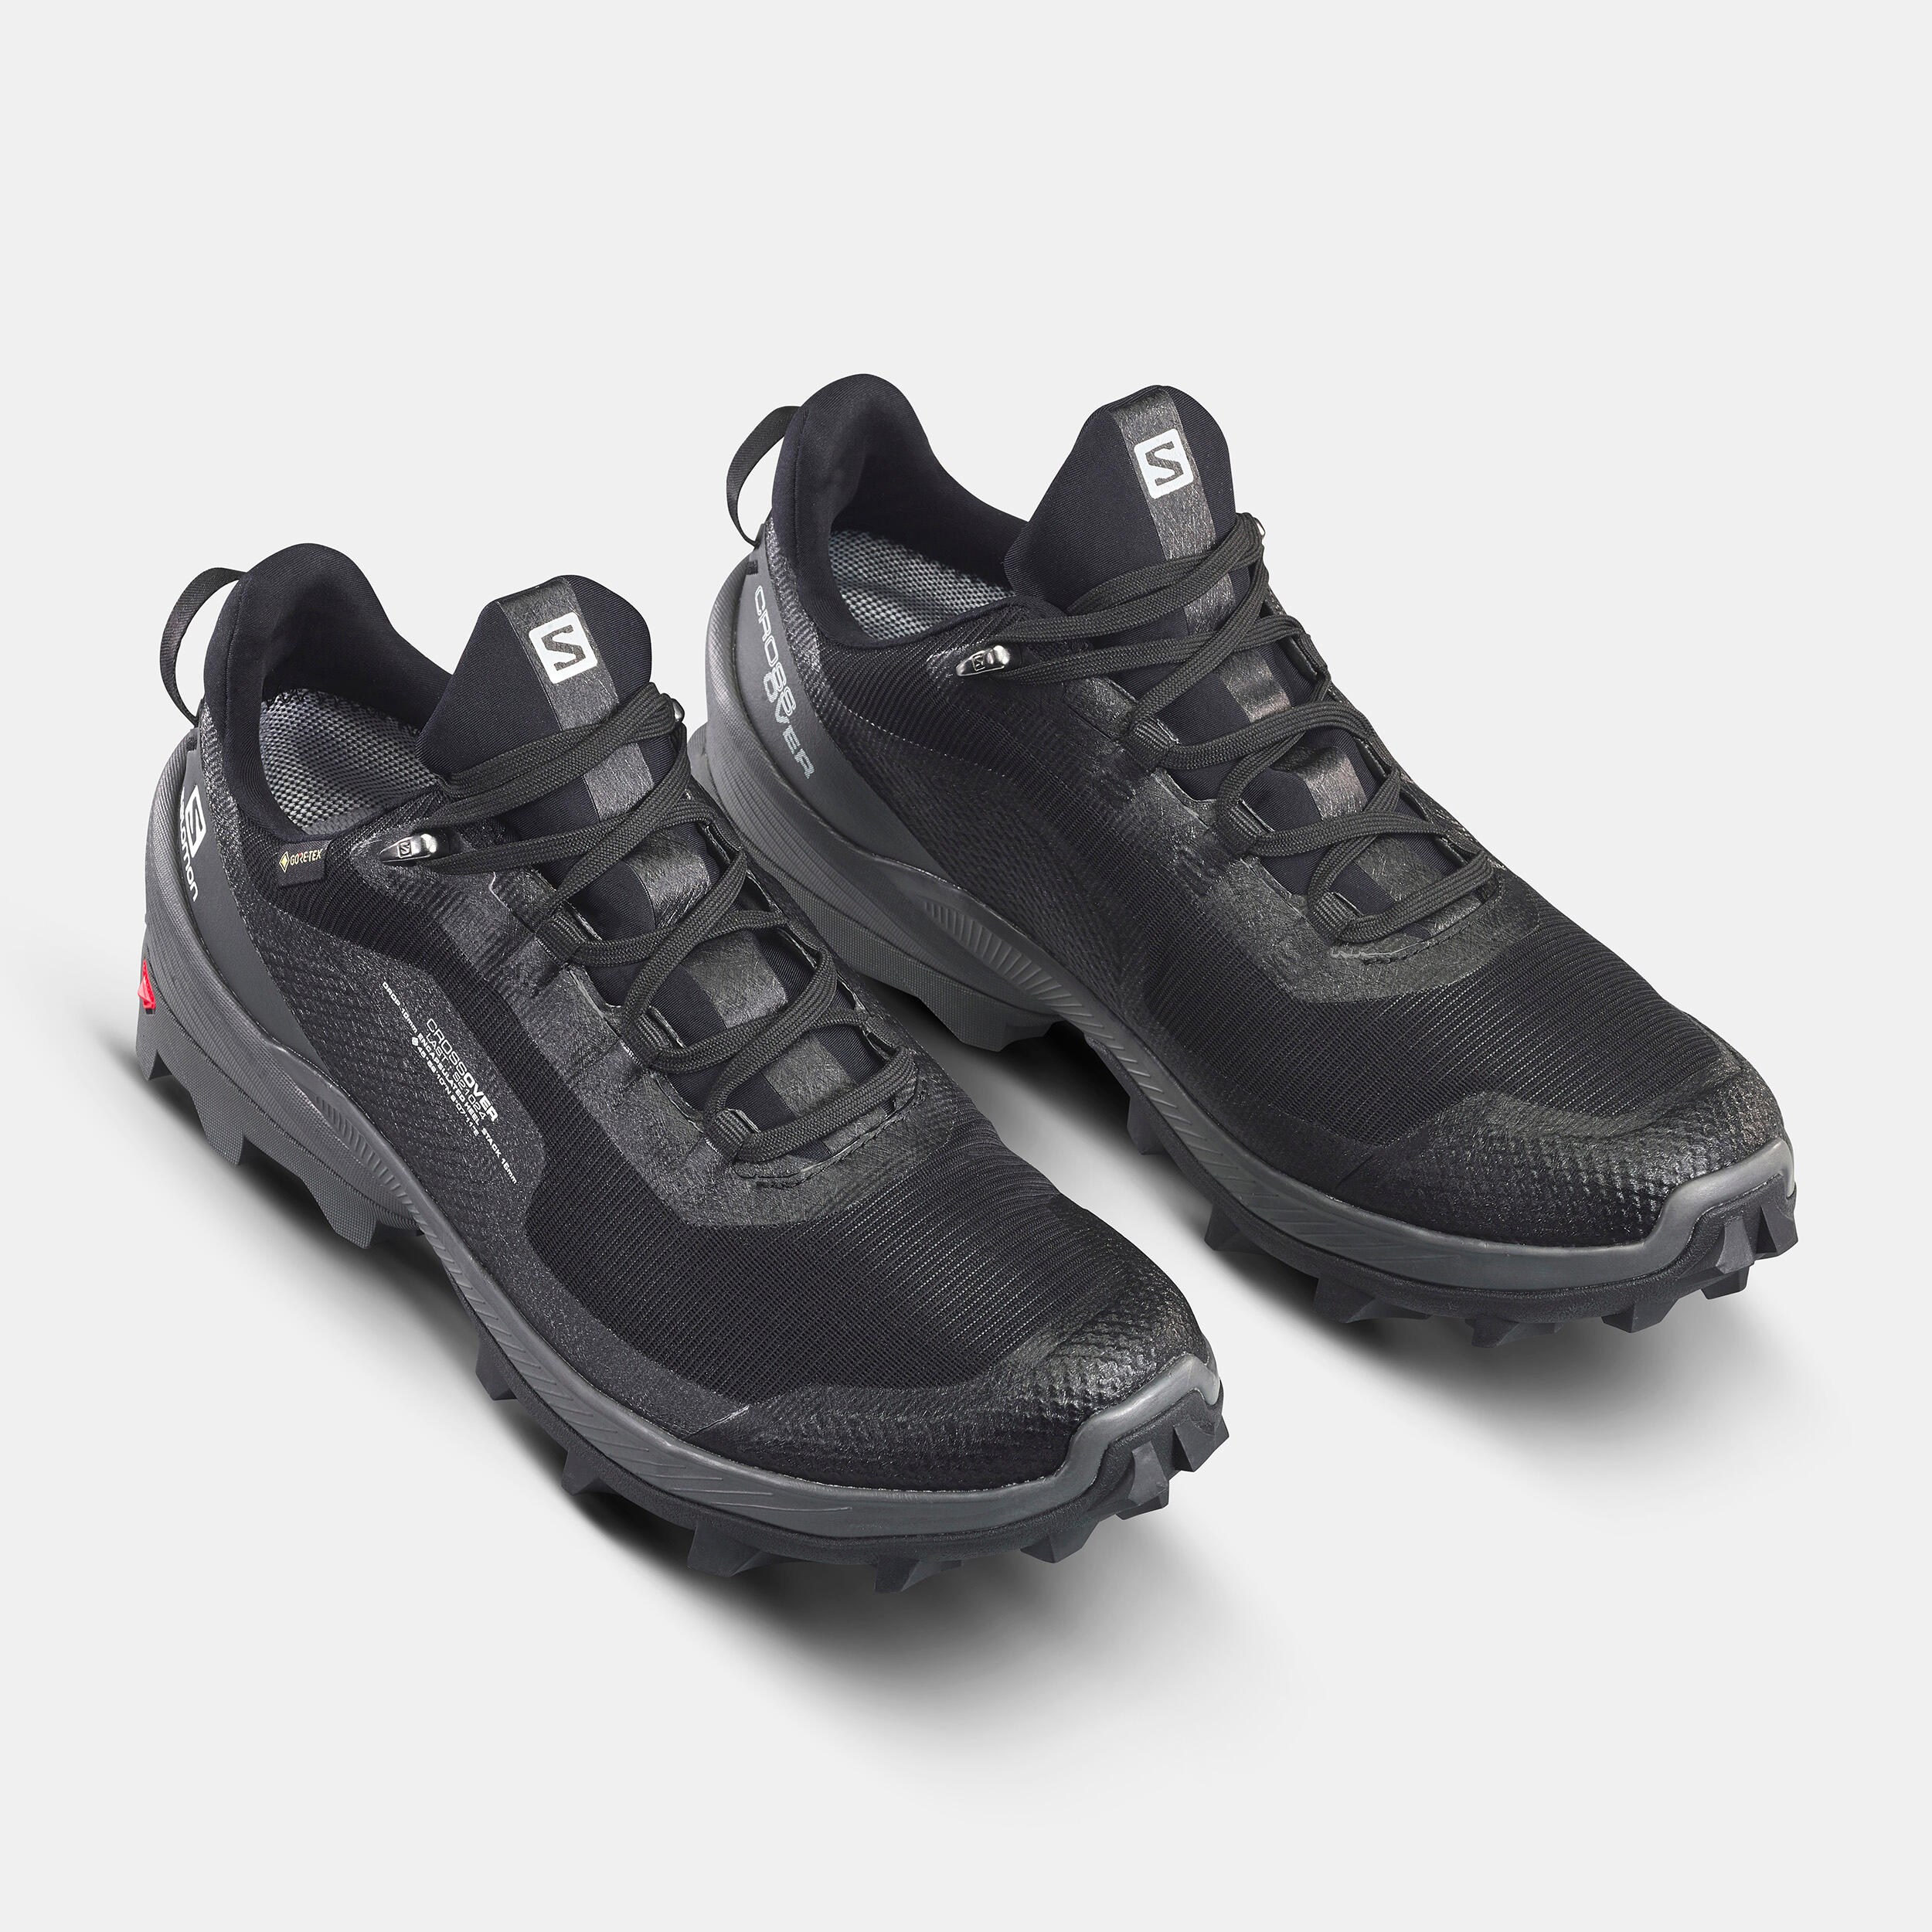 Men's waterproof walking shoes - Salomon Crossover - Black 4/5